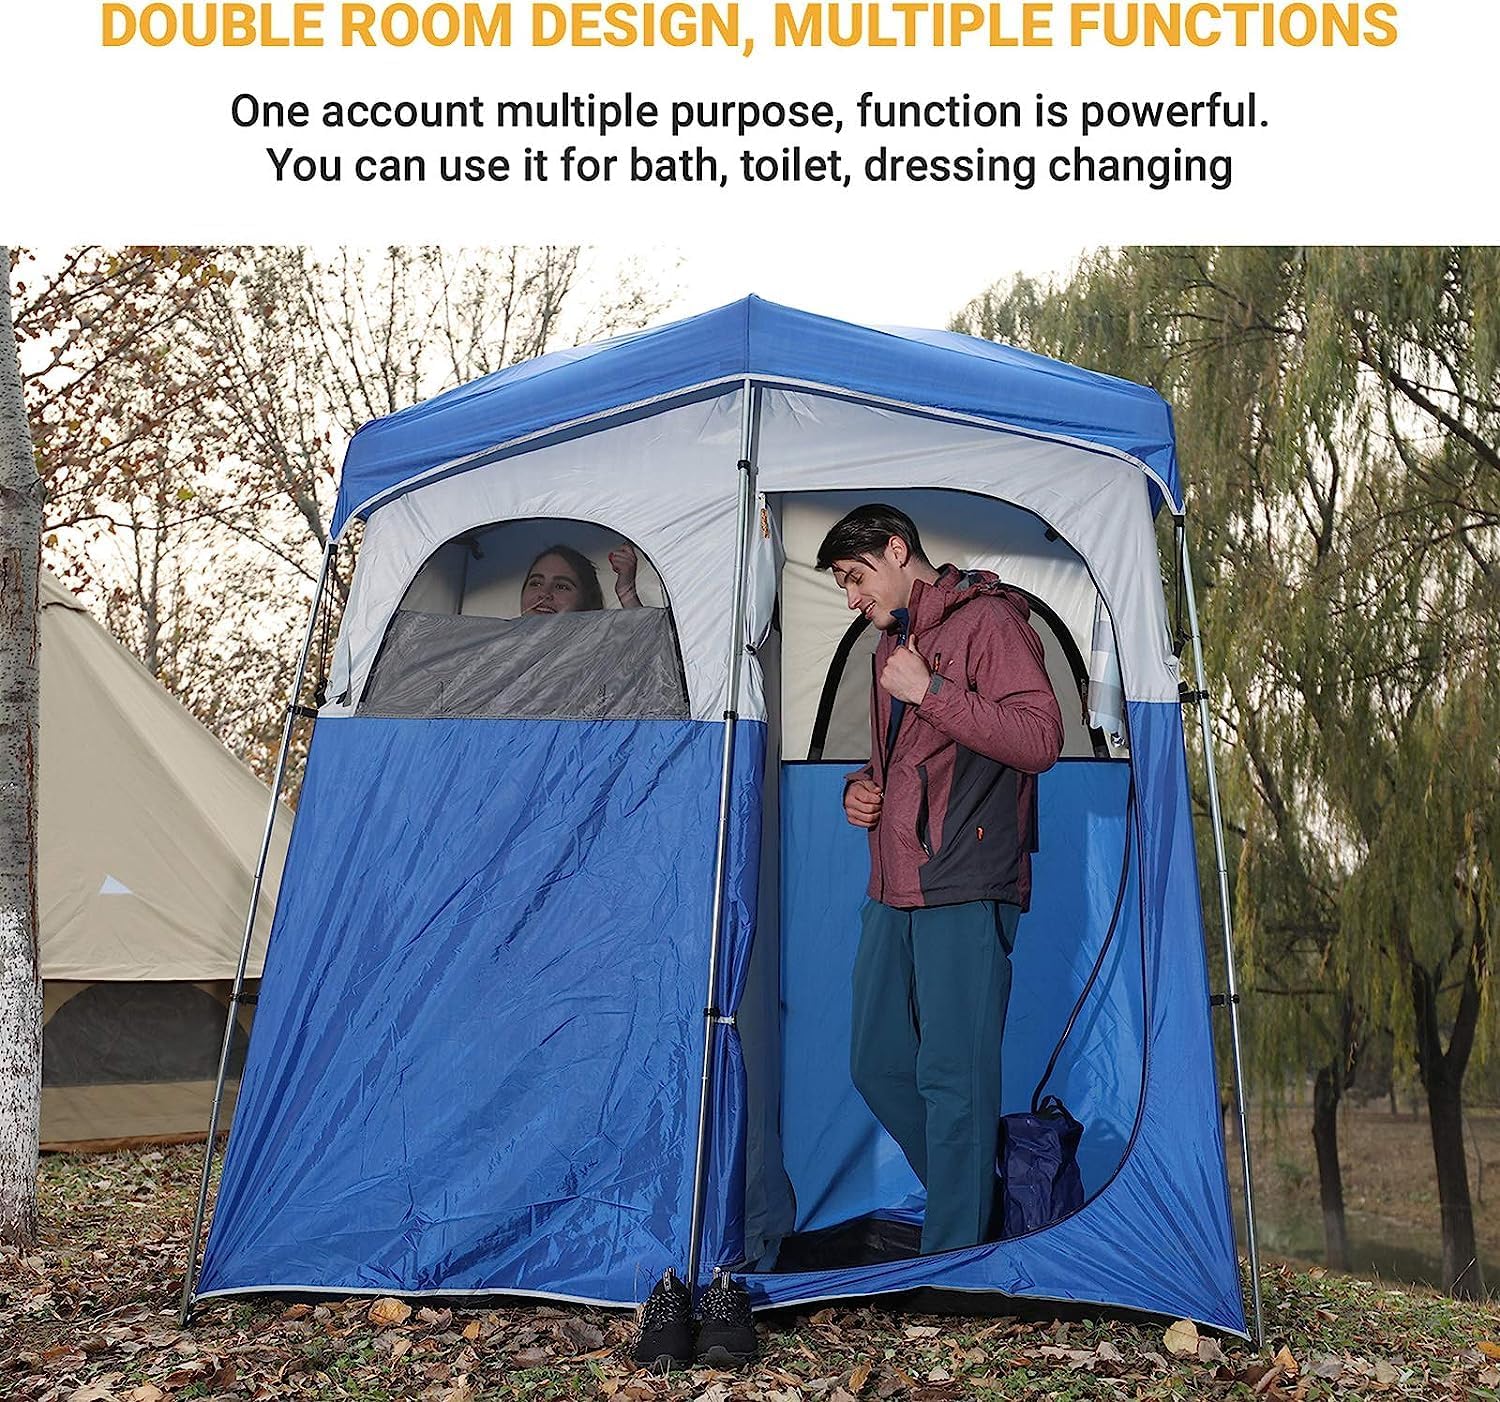 Versatile camping tent